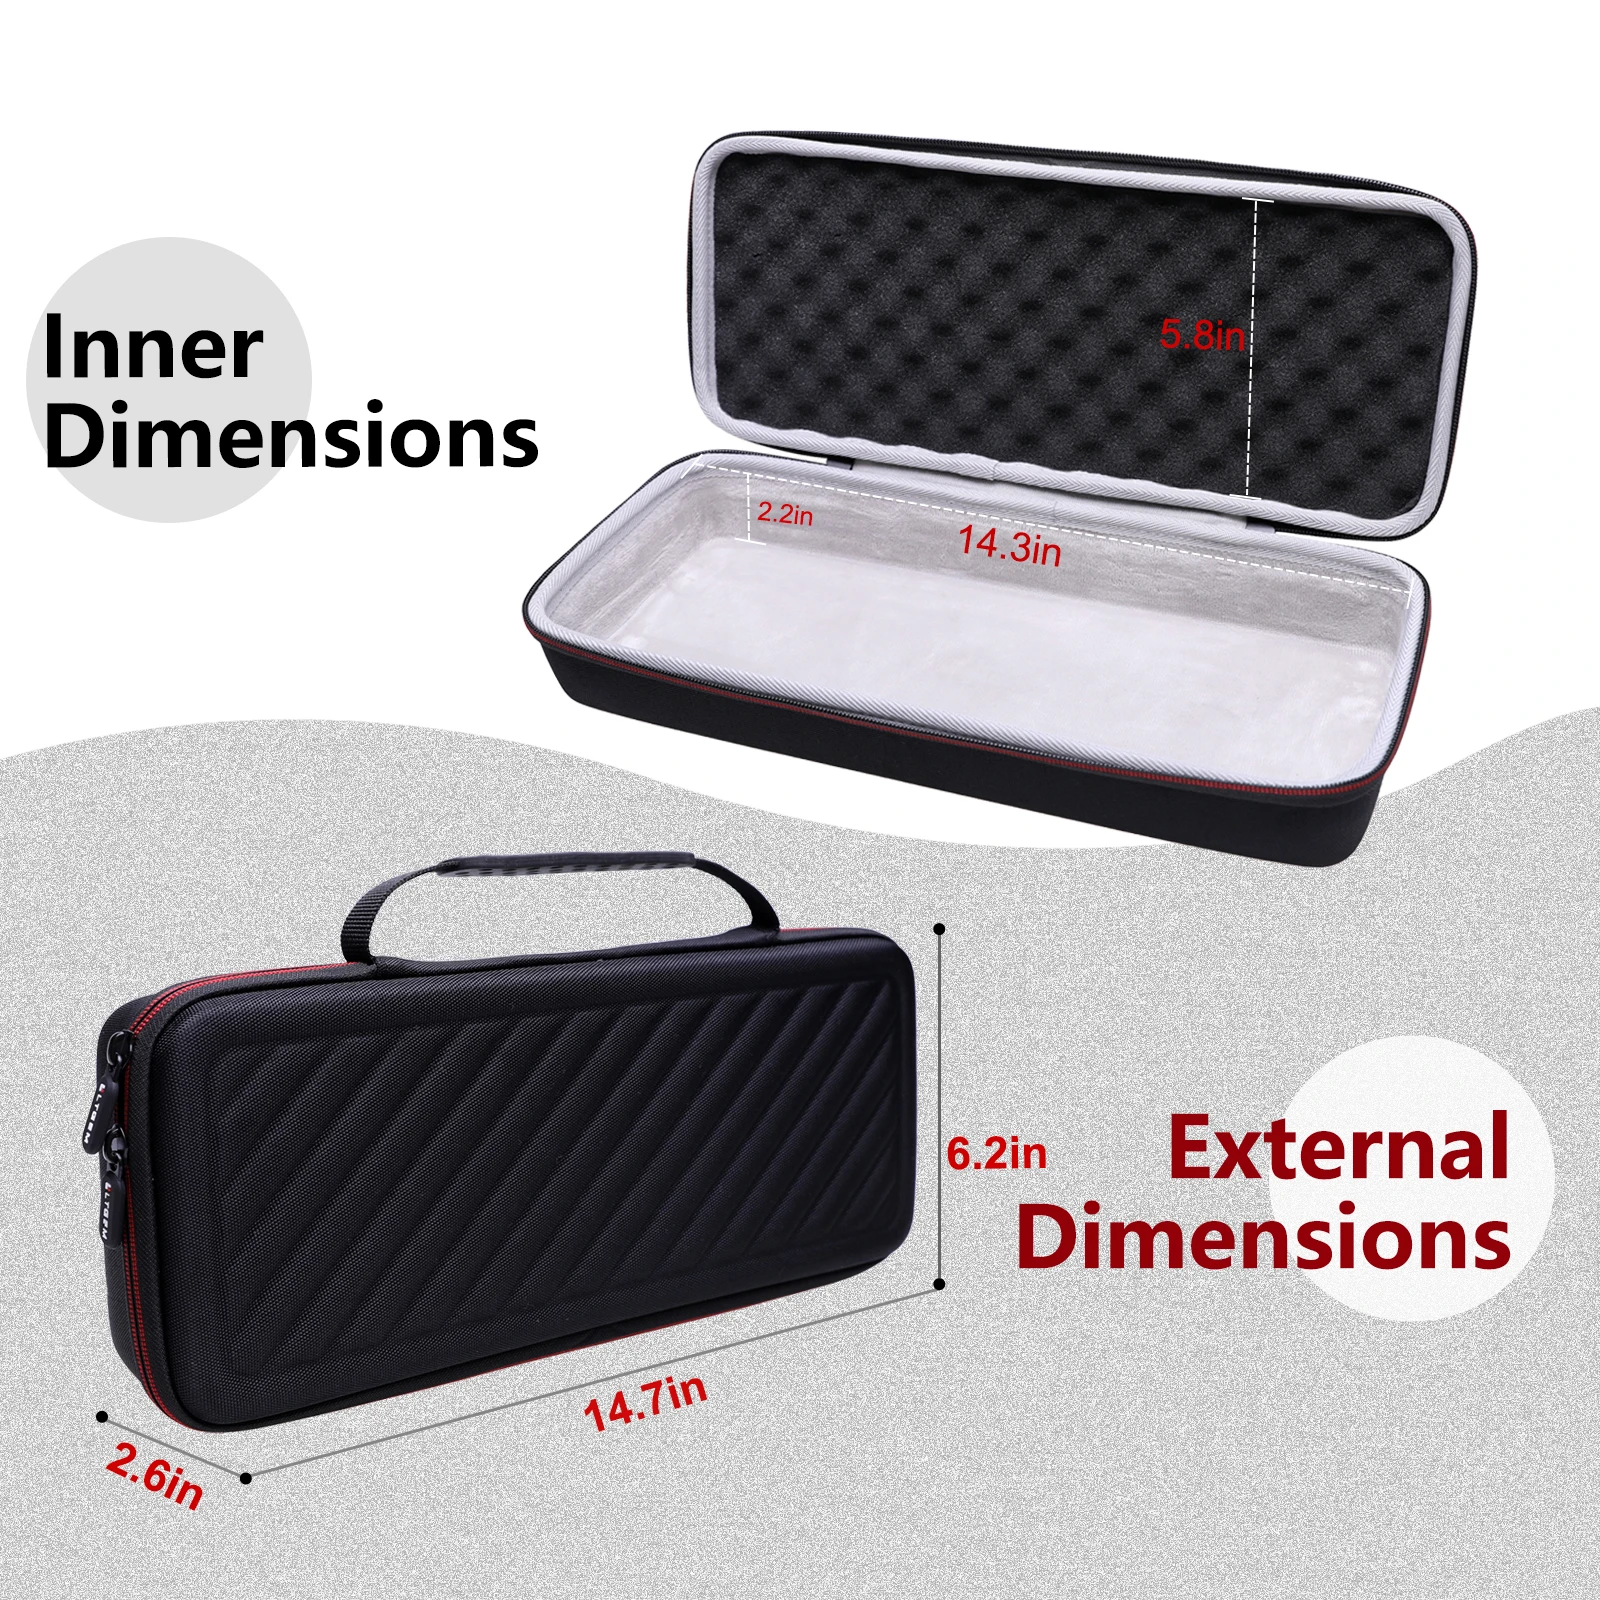 LTGEM EVA Hard Case for Hercules DJ Control Mix & Hercules Starlight | Pocket USB DJ Equipment  Protective Carrying Storage Bag